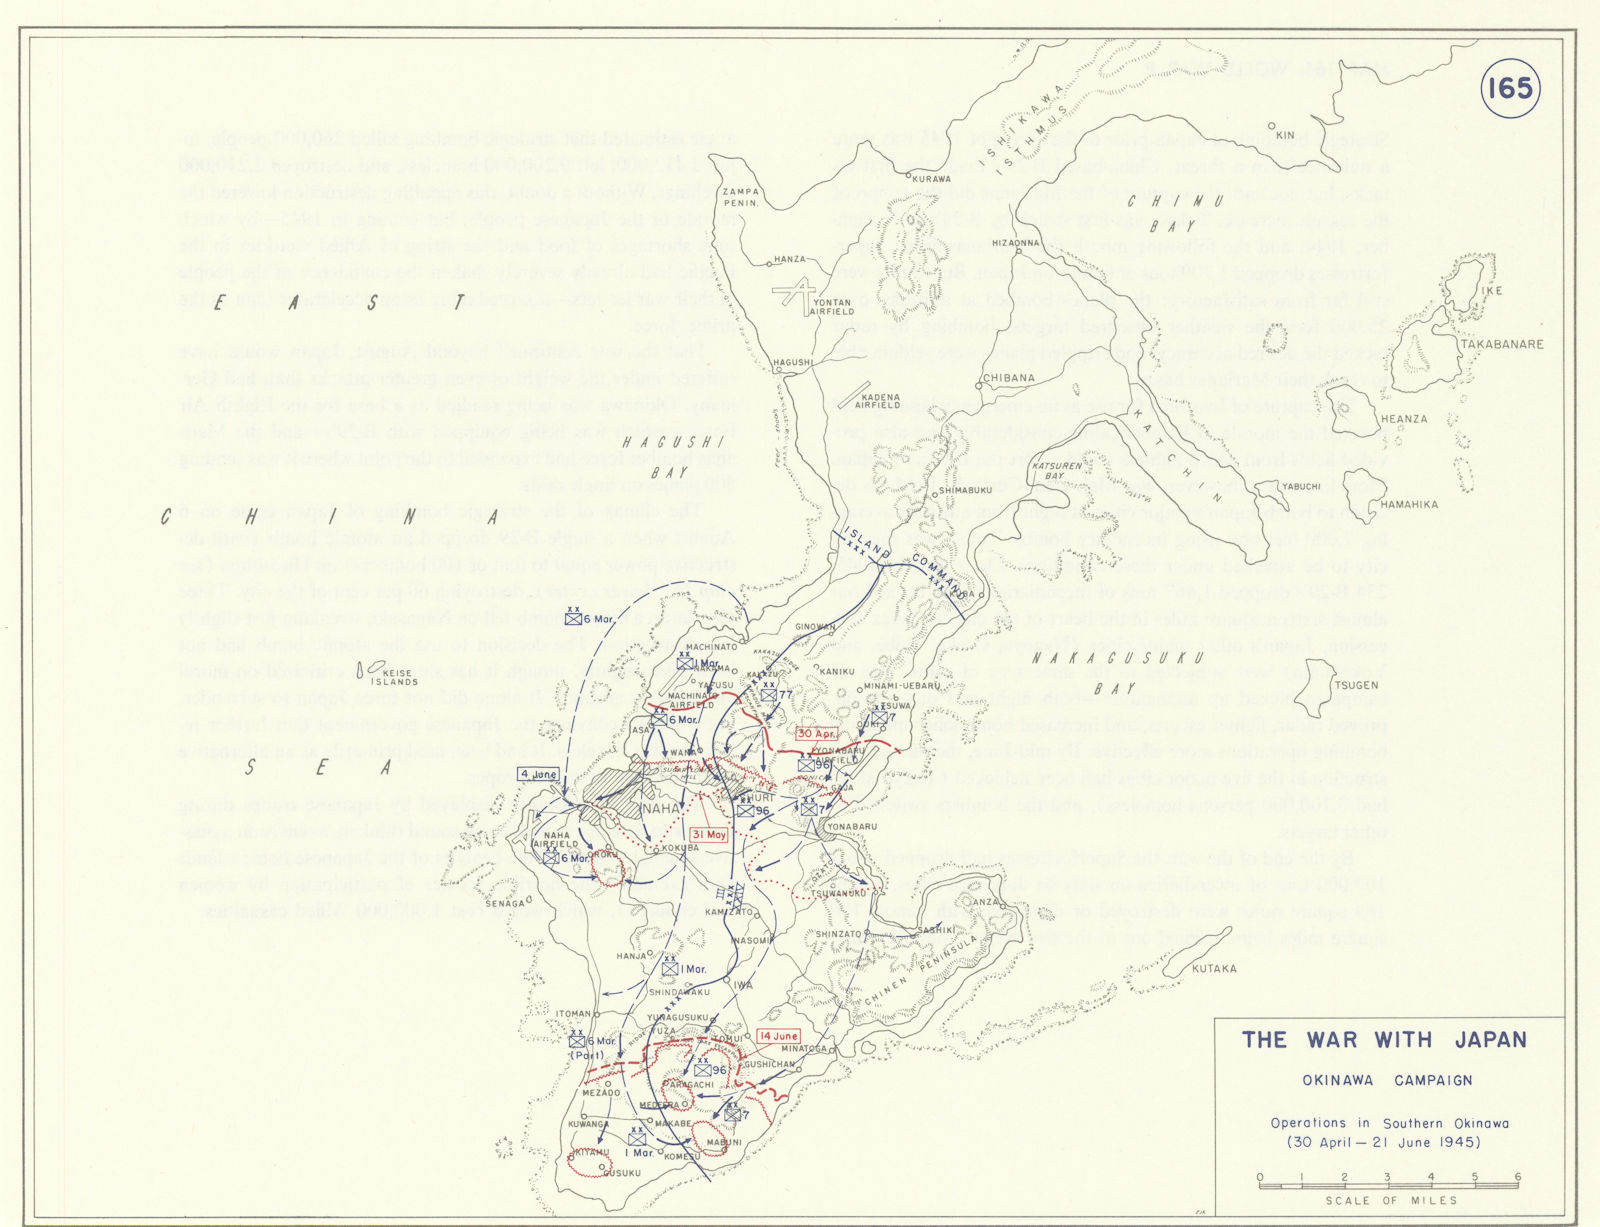 World War 2. Japan. 30 April-21 June 1945 Southern Okinawa Campaign 1959 map